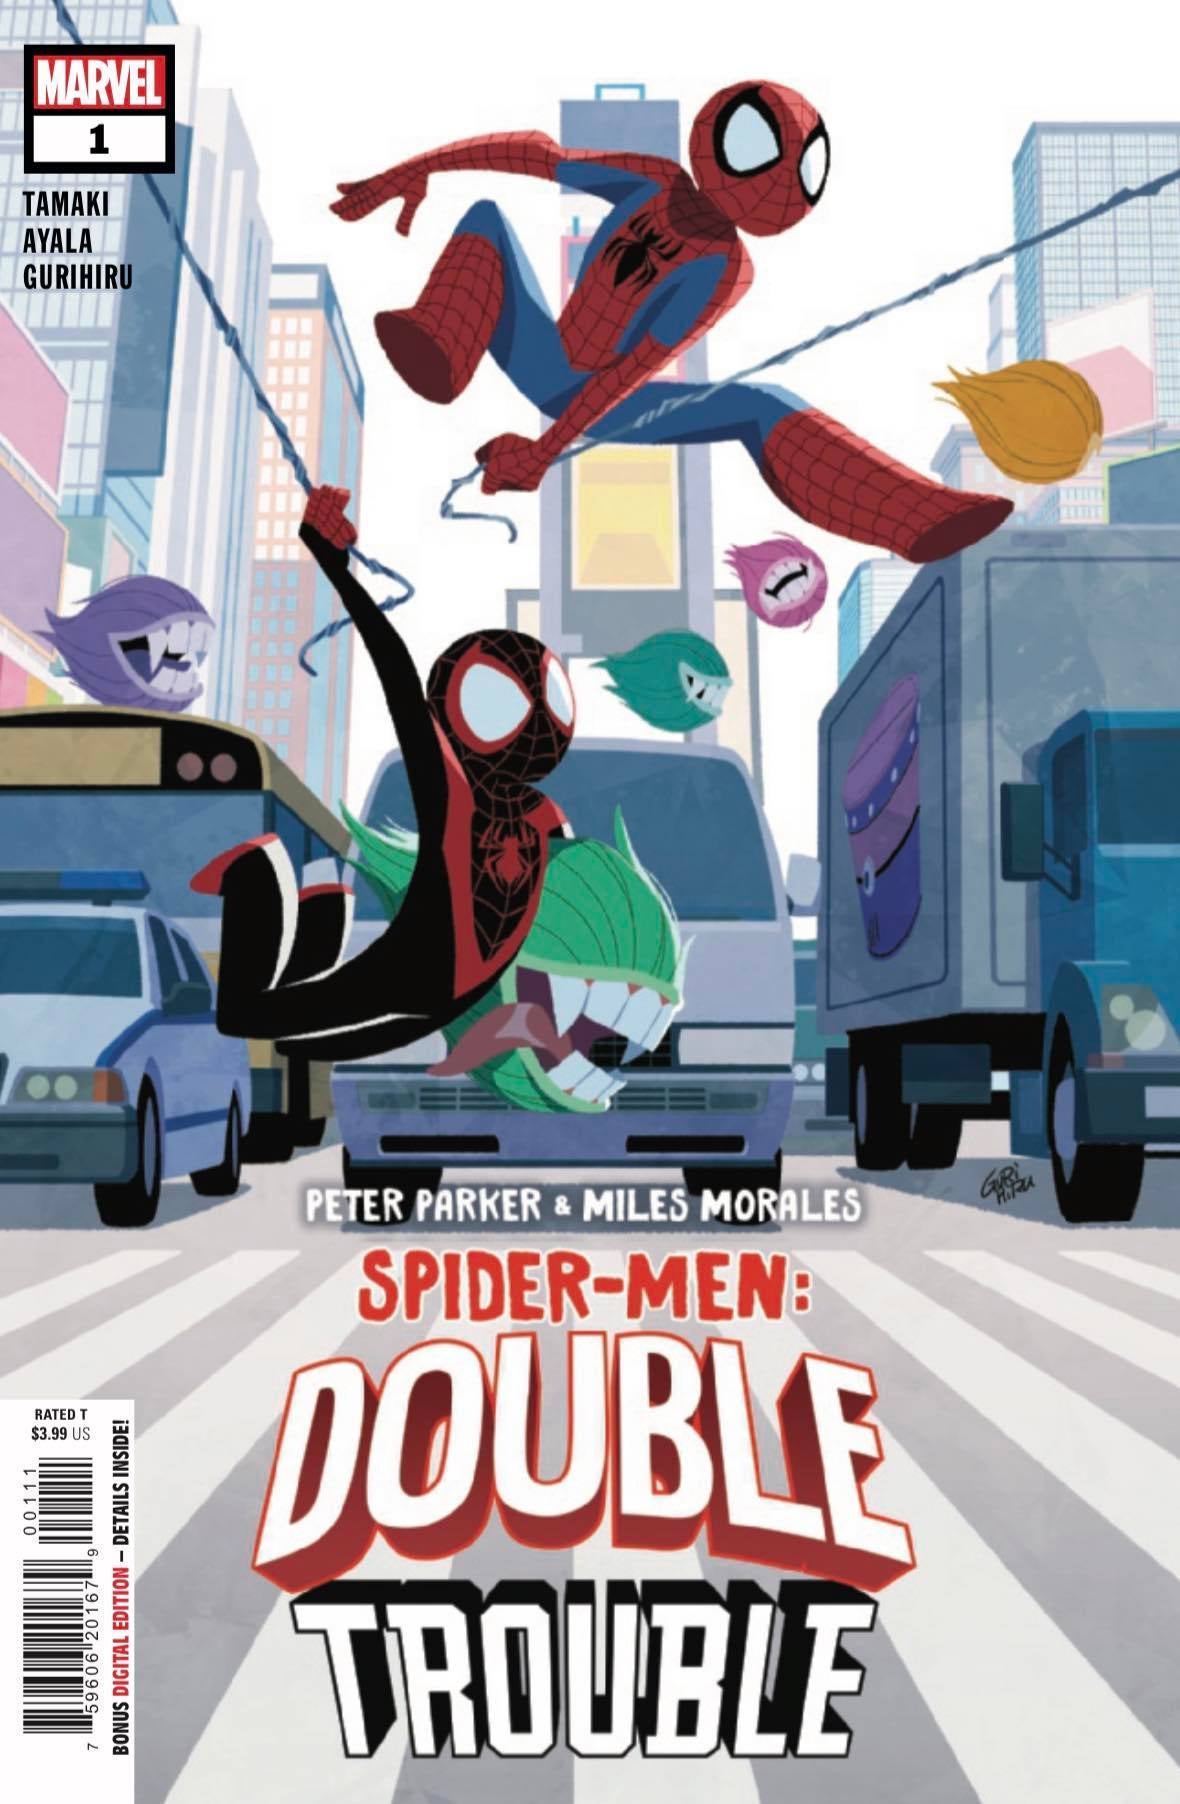 Peter Parker & Miles Morales: Spider-Men Double Trouble #1 cover (art by Gurihiru)